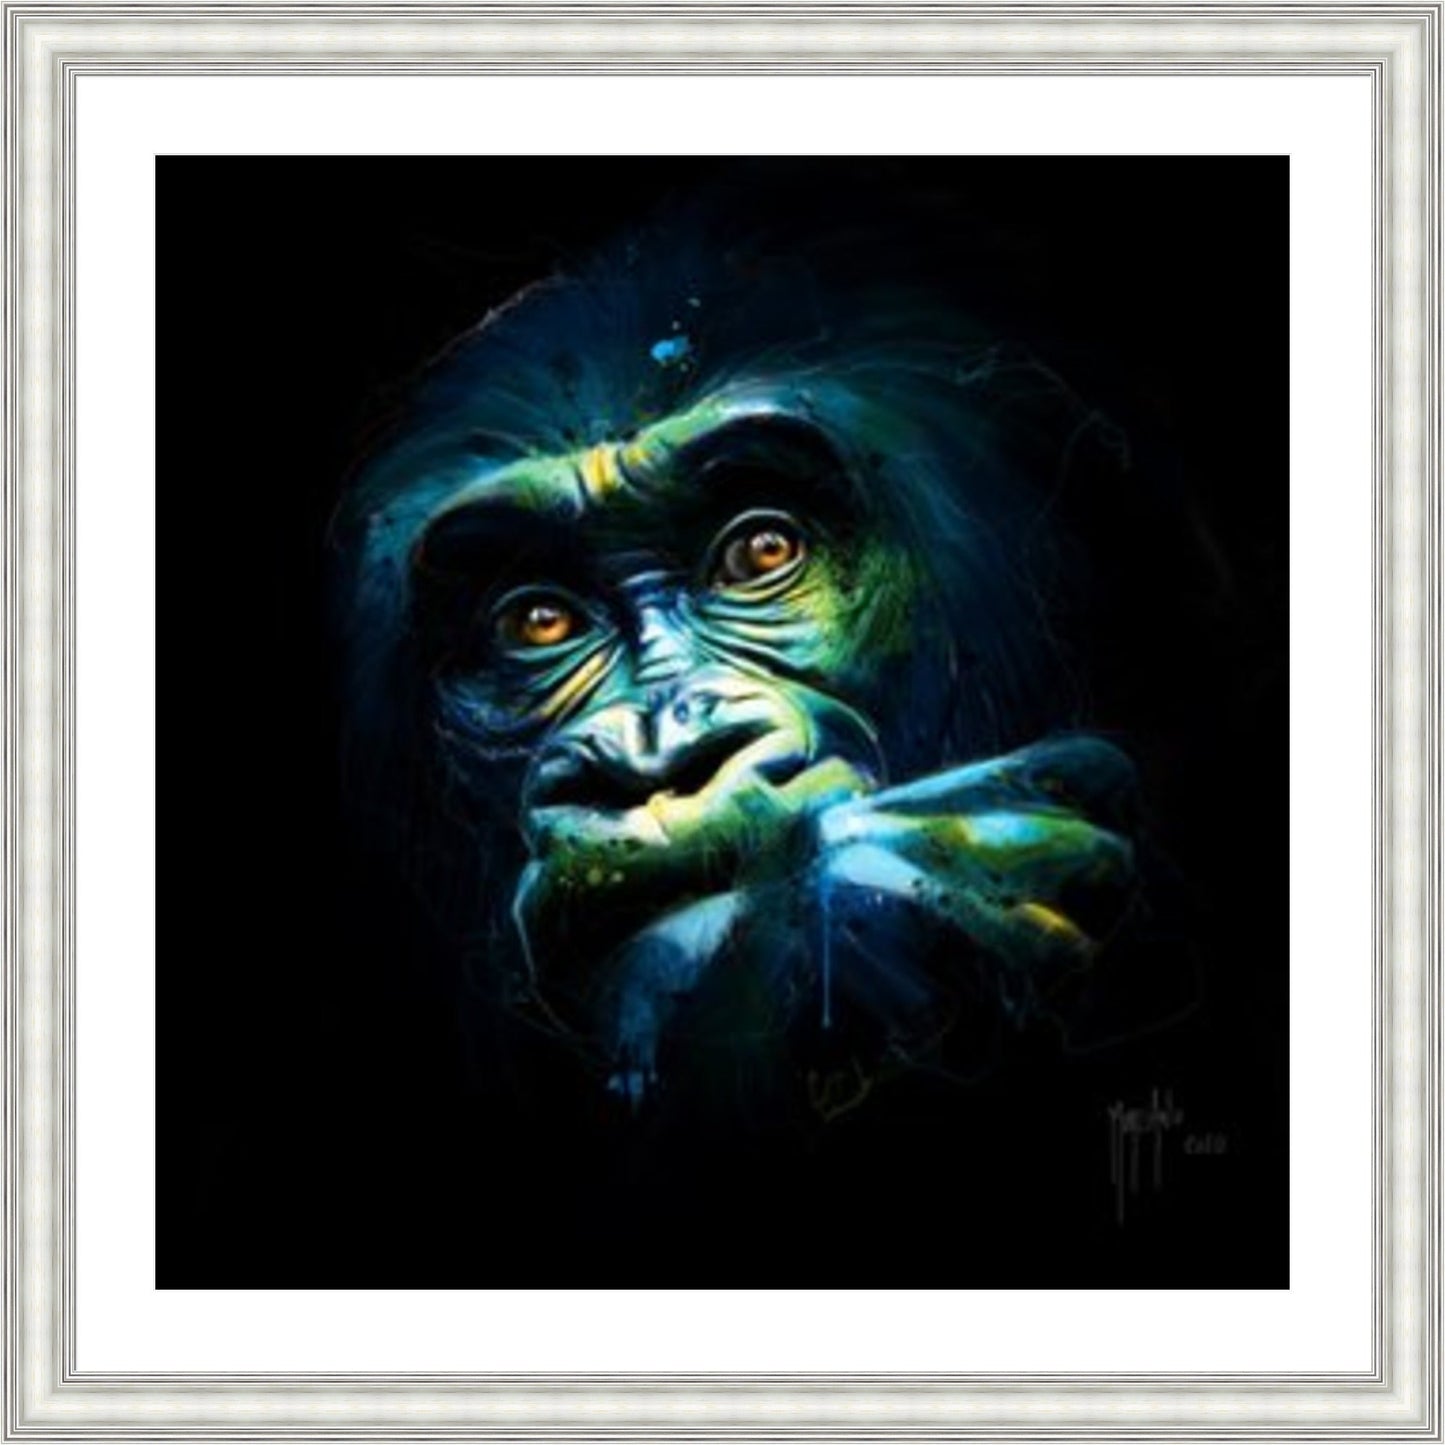 Black Kong (Gorilla) by Patrice Murciano